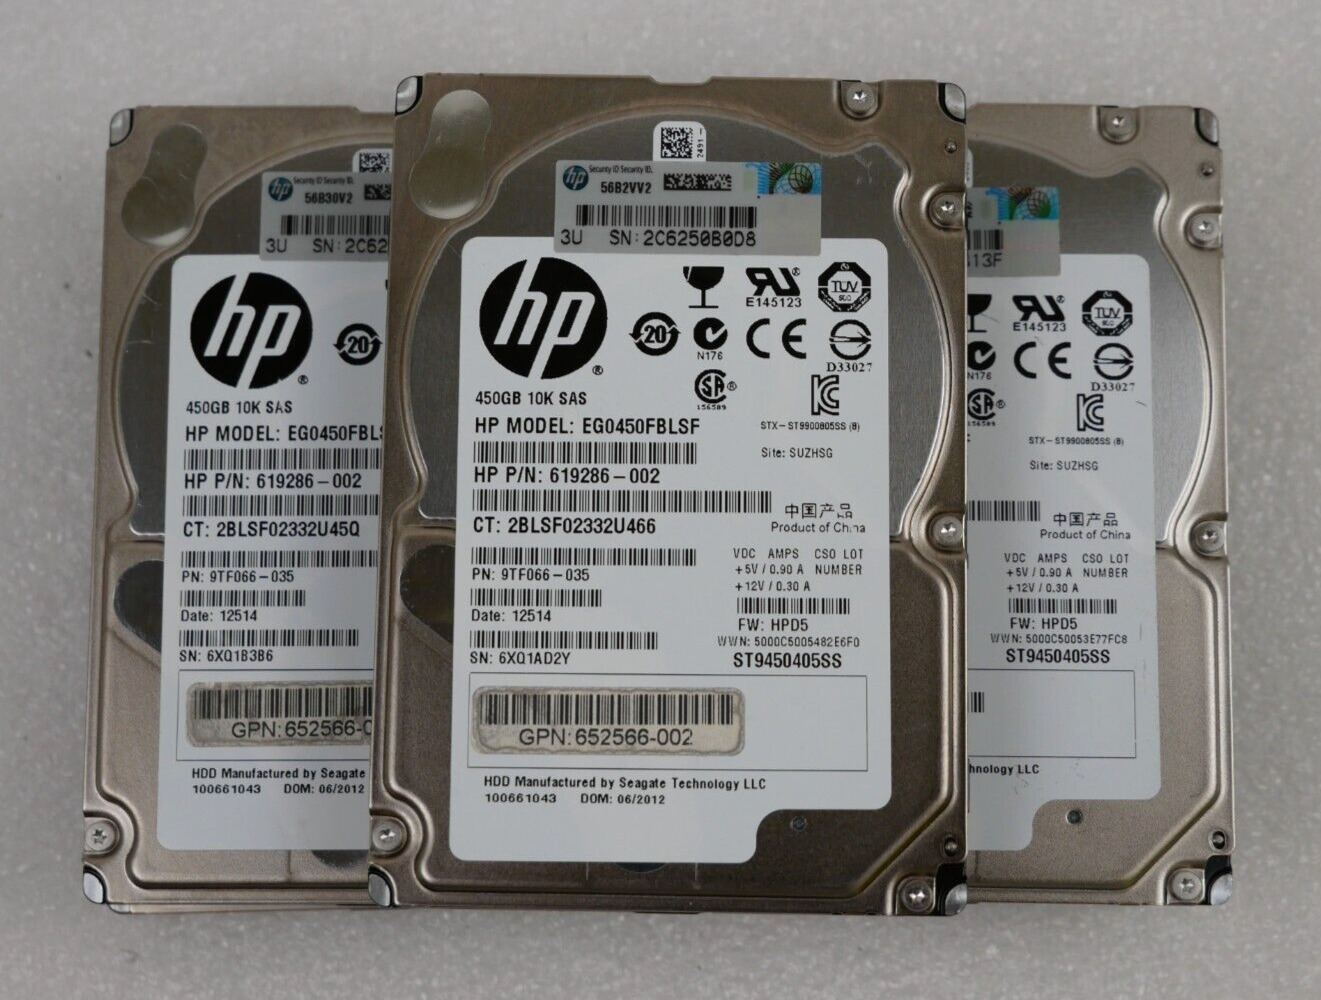 Lot of 5 HP 619286-002 ST9450405SS 450GB 10K 6G SAS 2.5